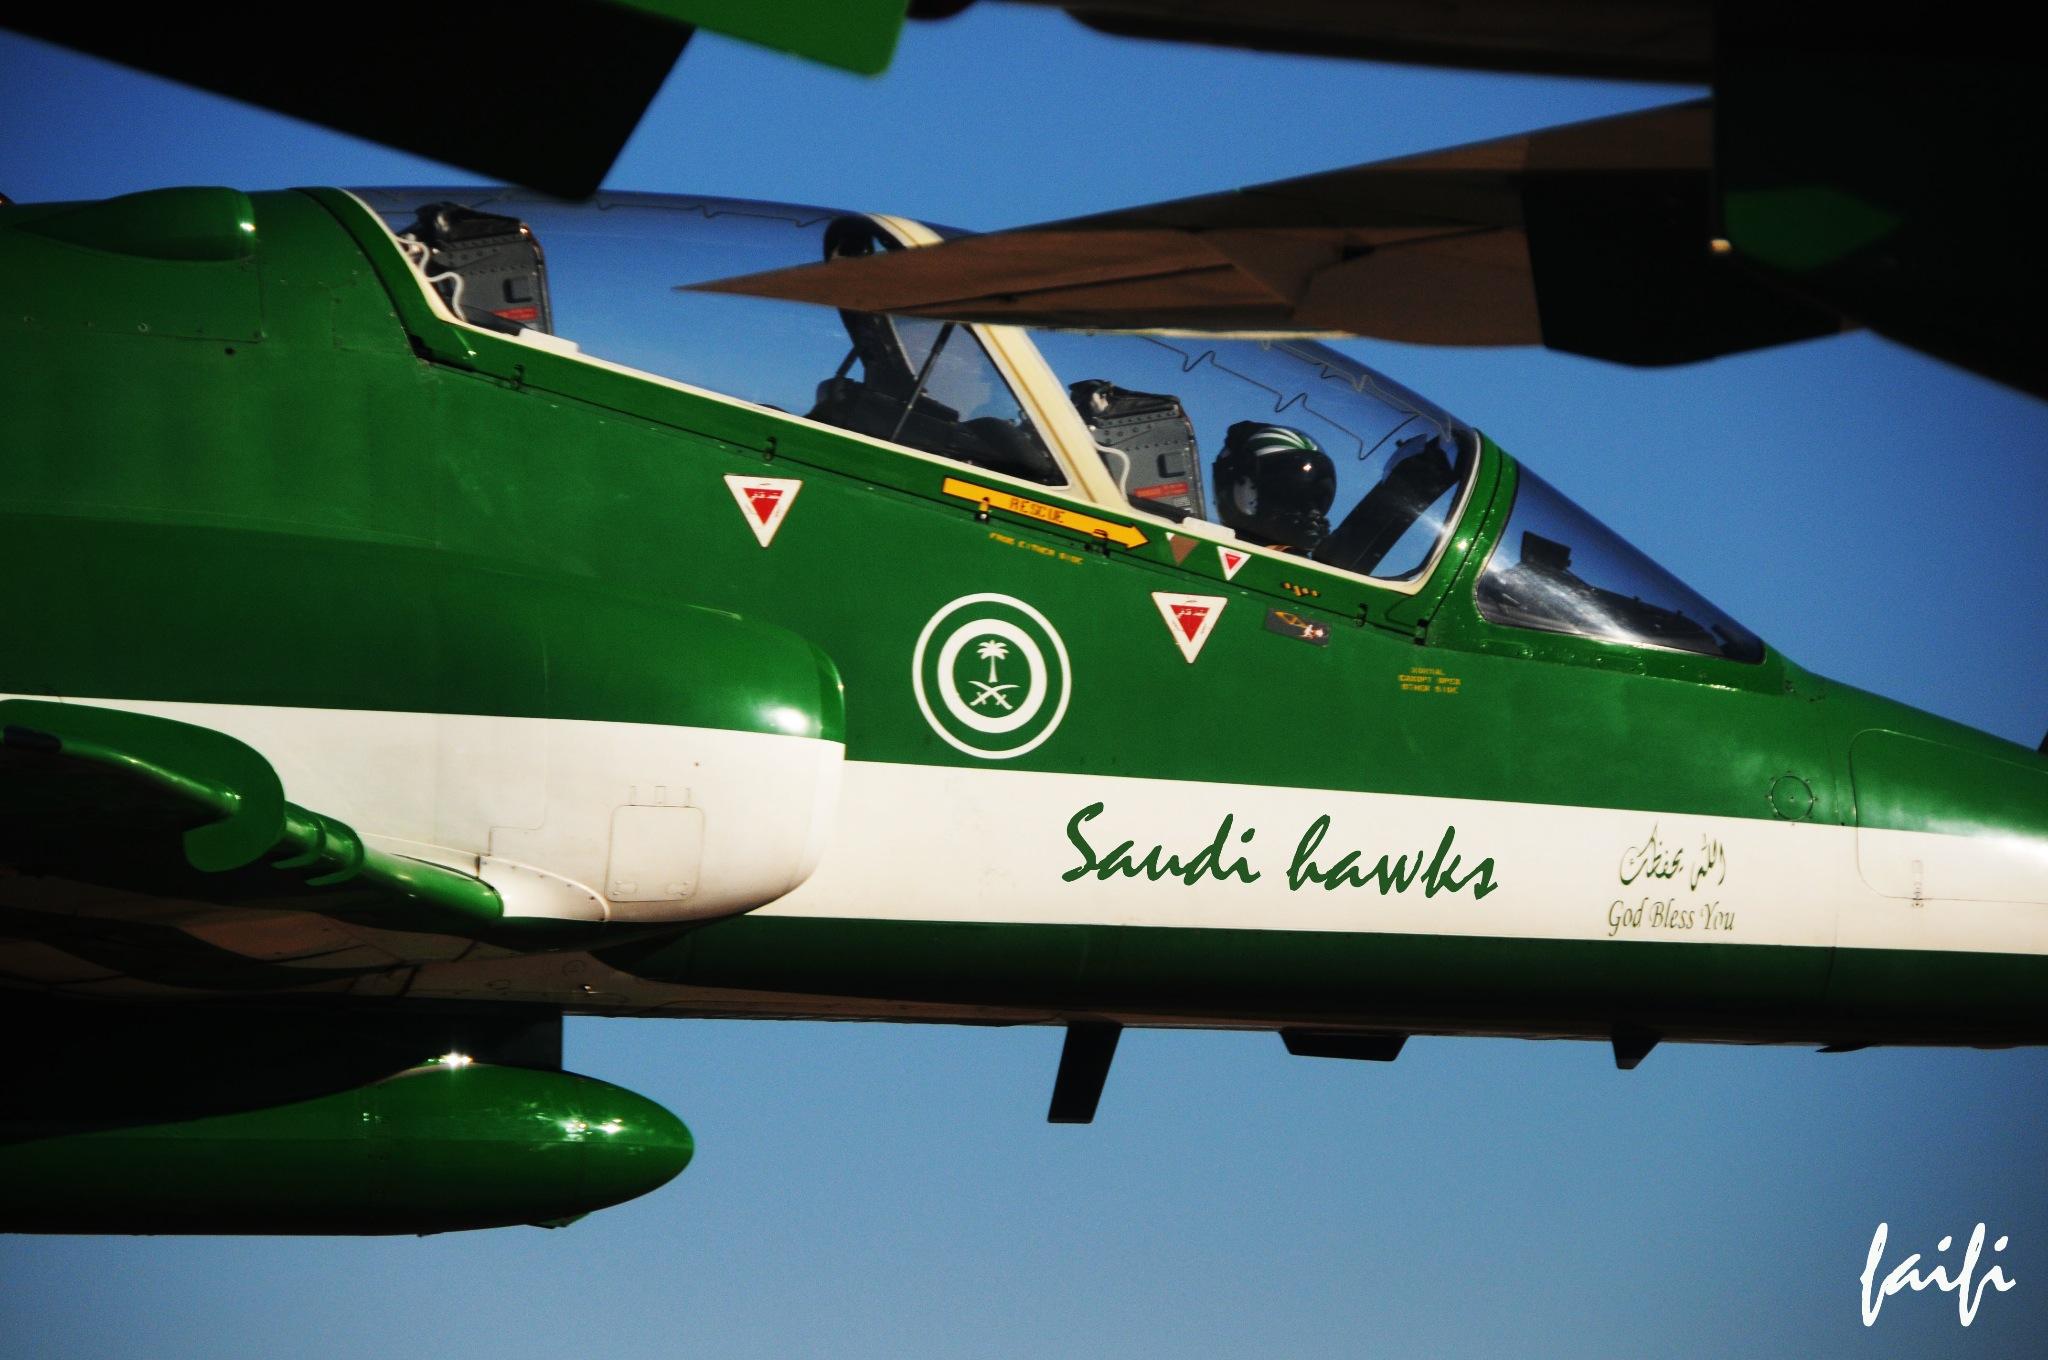 Saudi Hawks احترافية عالية  A8Dks0DCIAI4clR